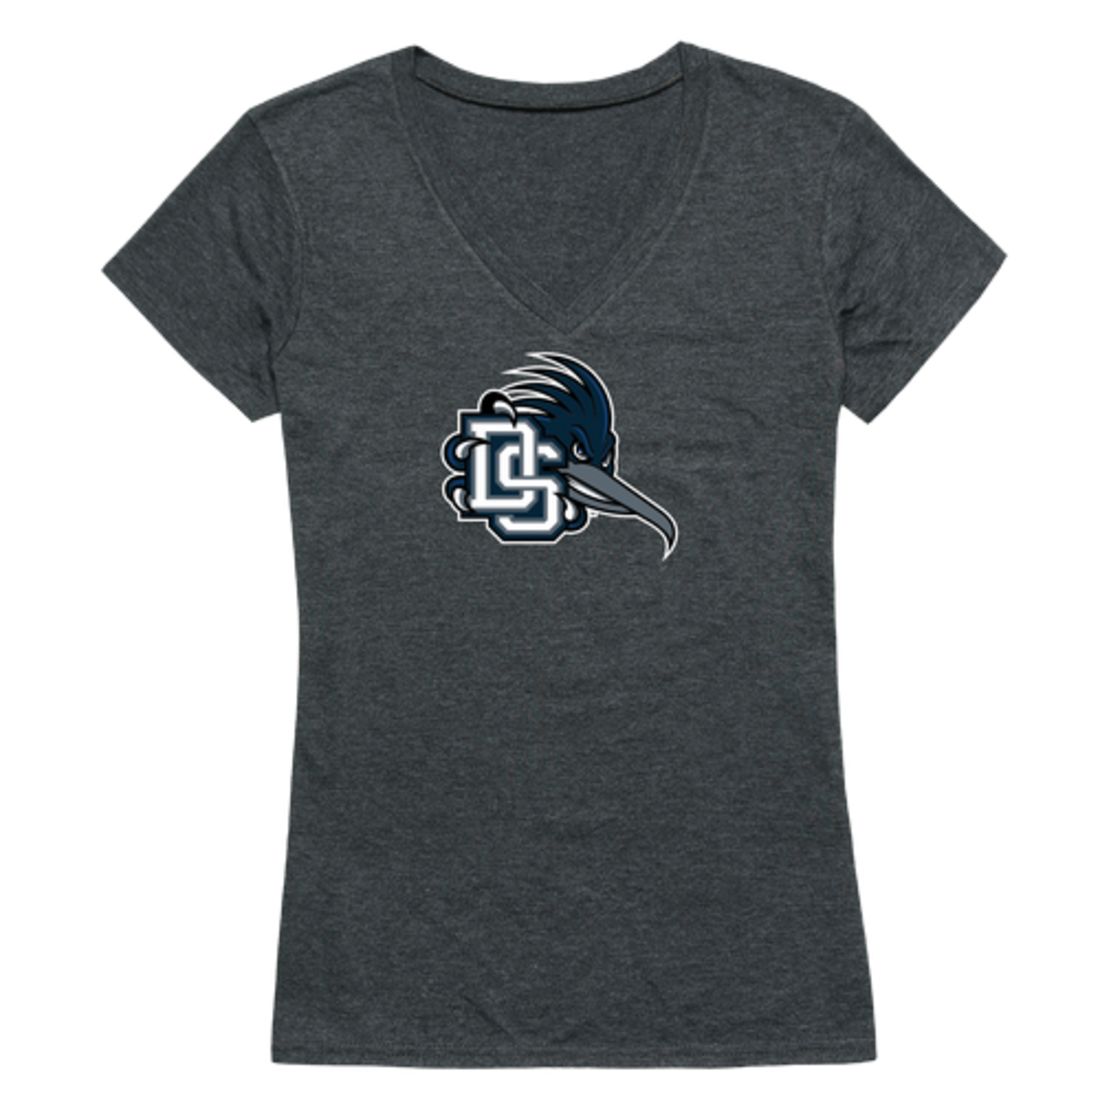 Dalton State College Roadrunners Womens Cinder T-Shirt Tee